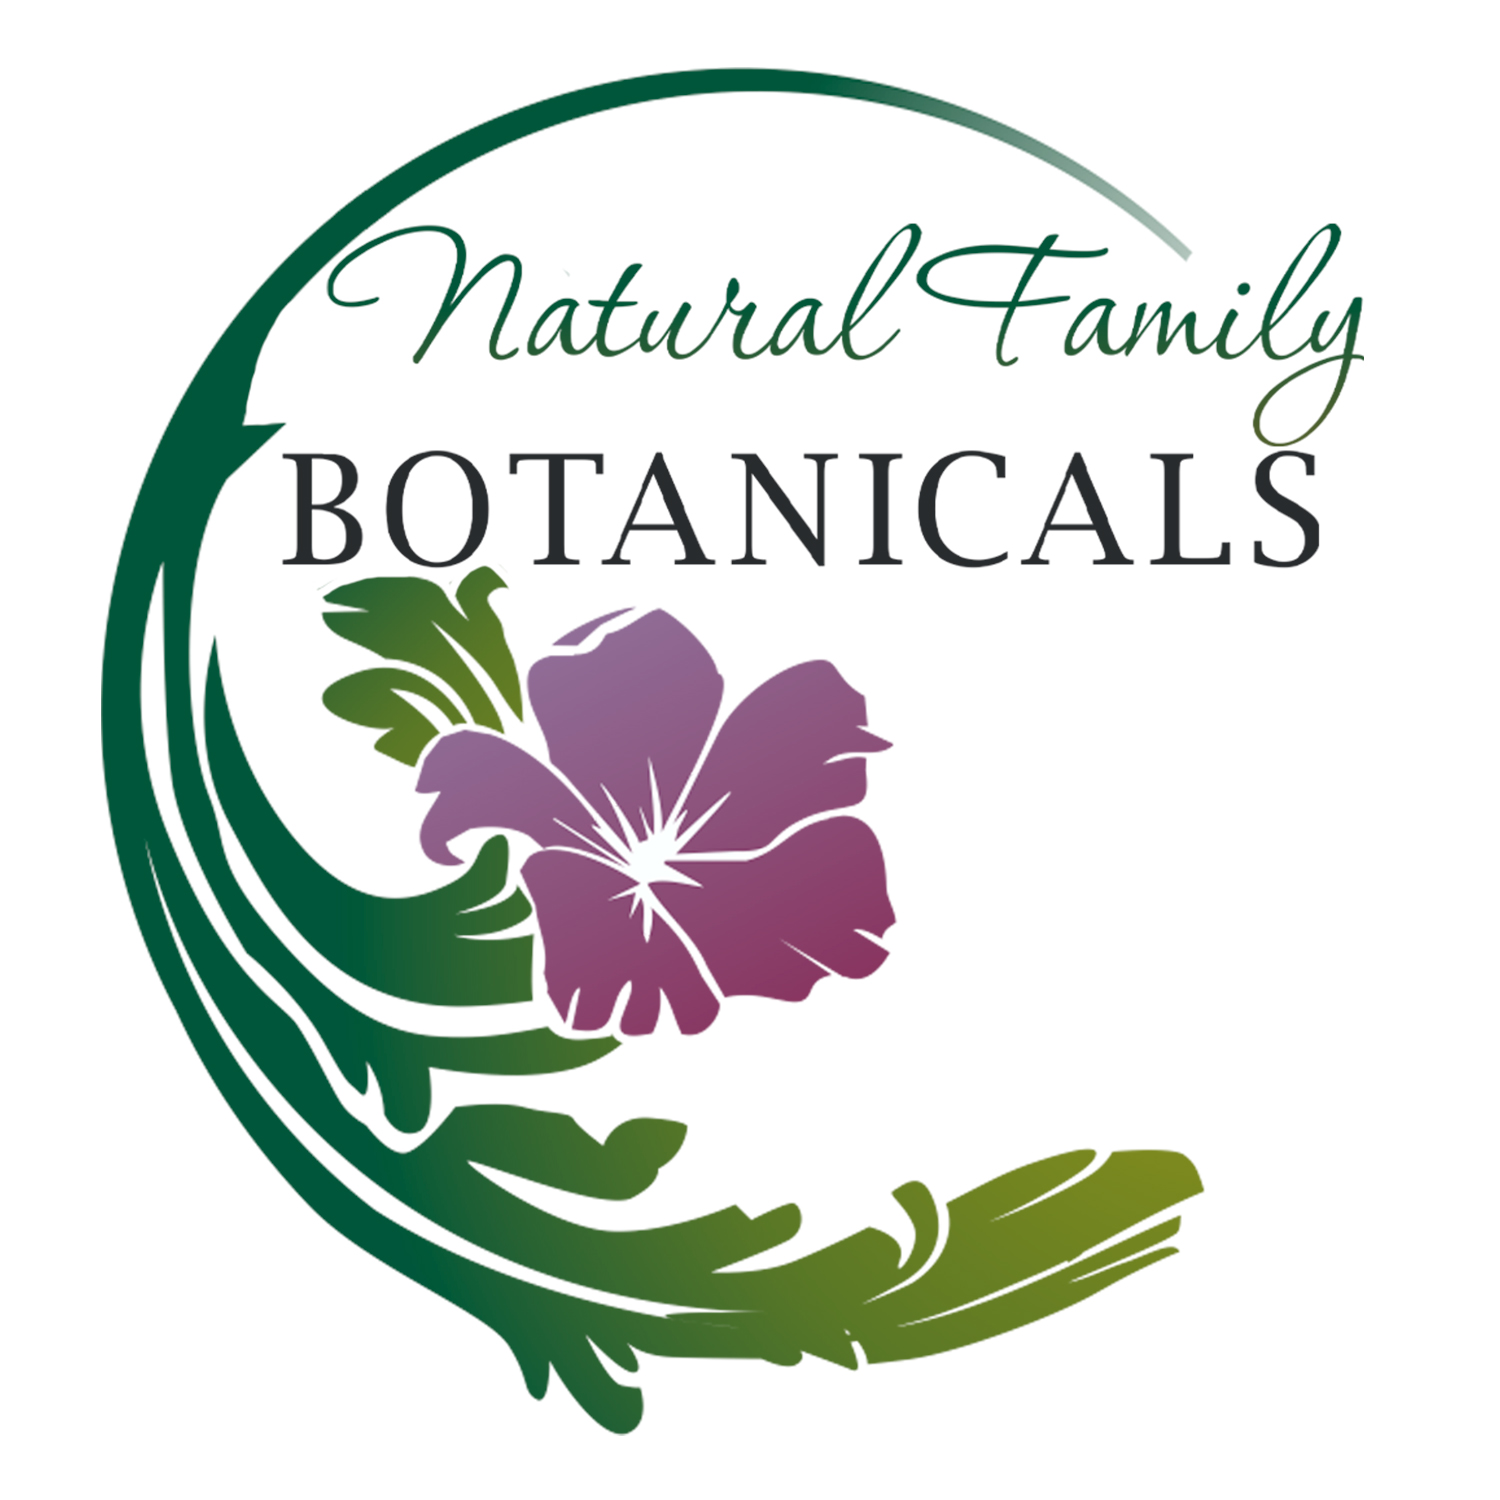 Natural Family Botanicals - Formula Botanica